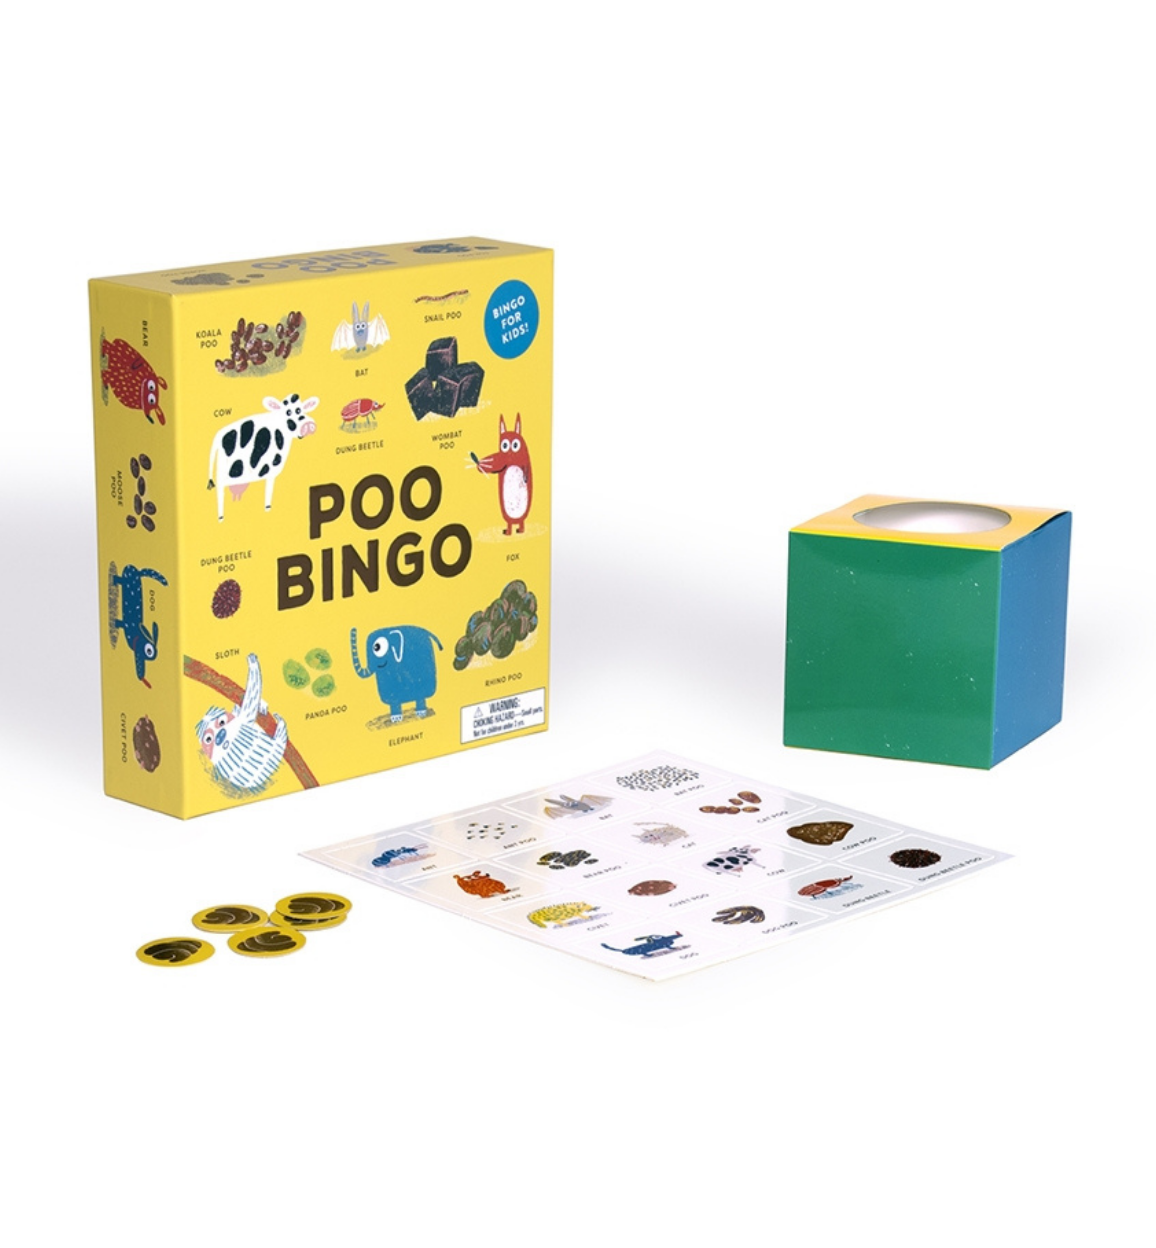 A Poo Bingo board game and box